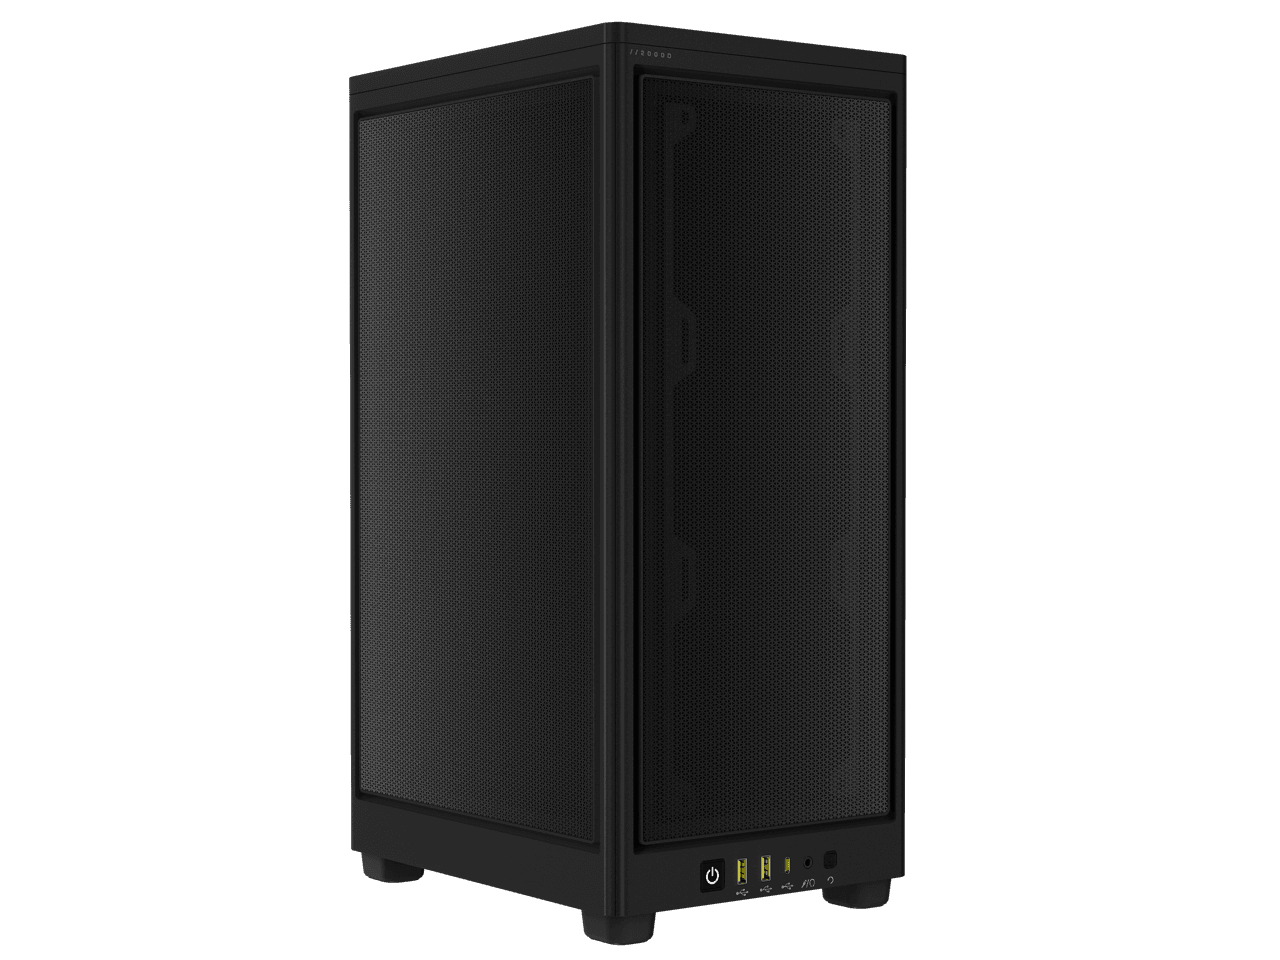 2000D AIRFLOW  ITX TOWER BLACK